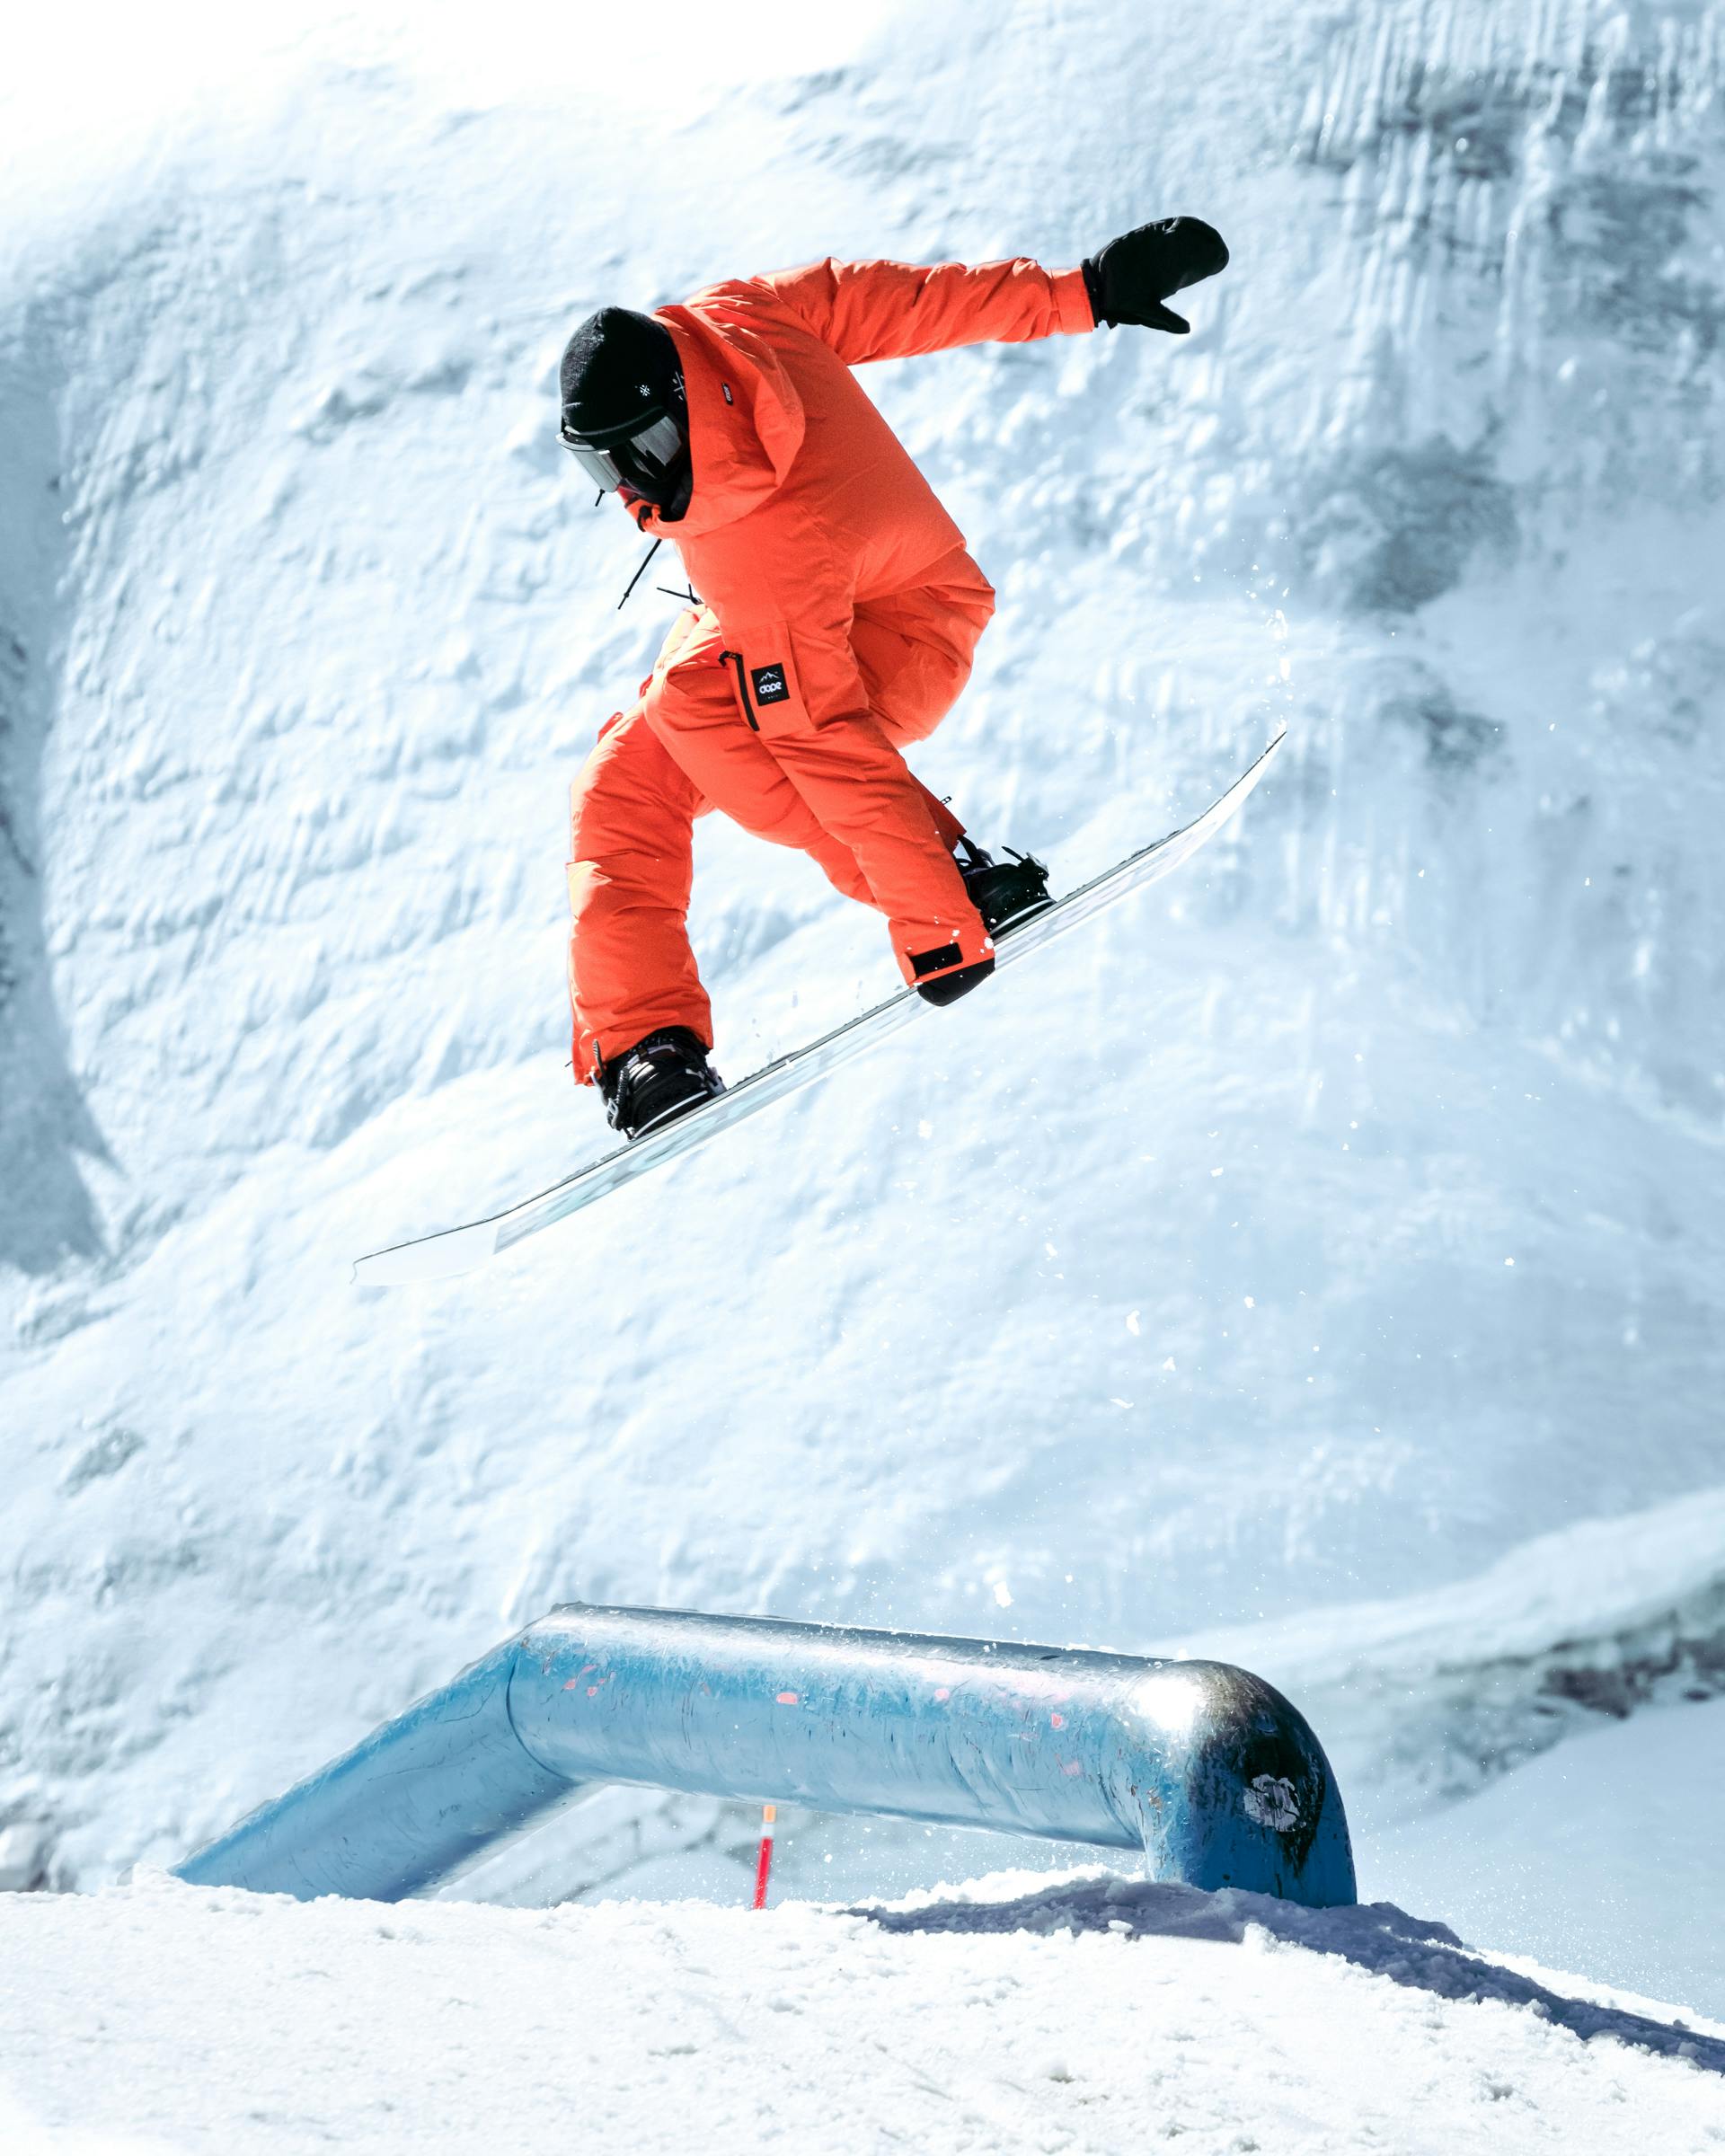 tricks on a snowboard